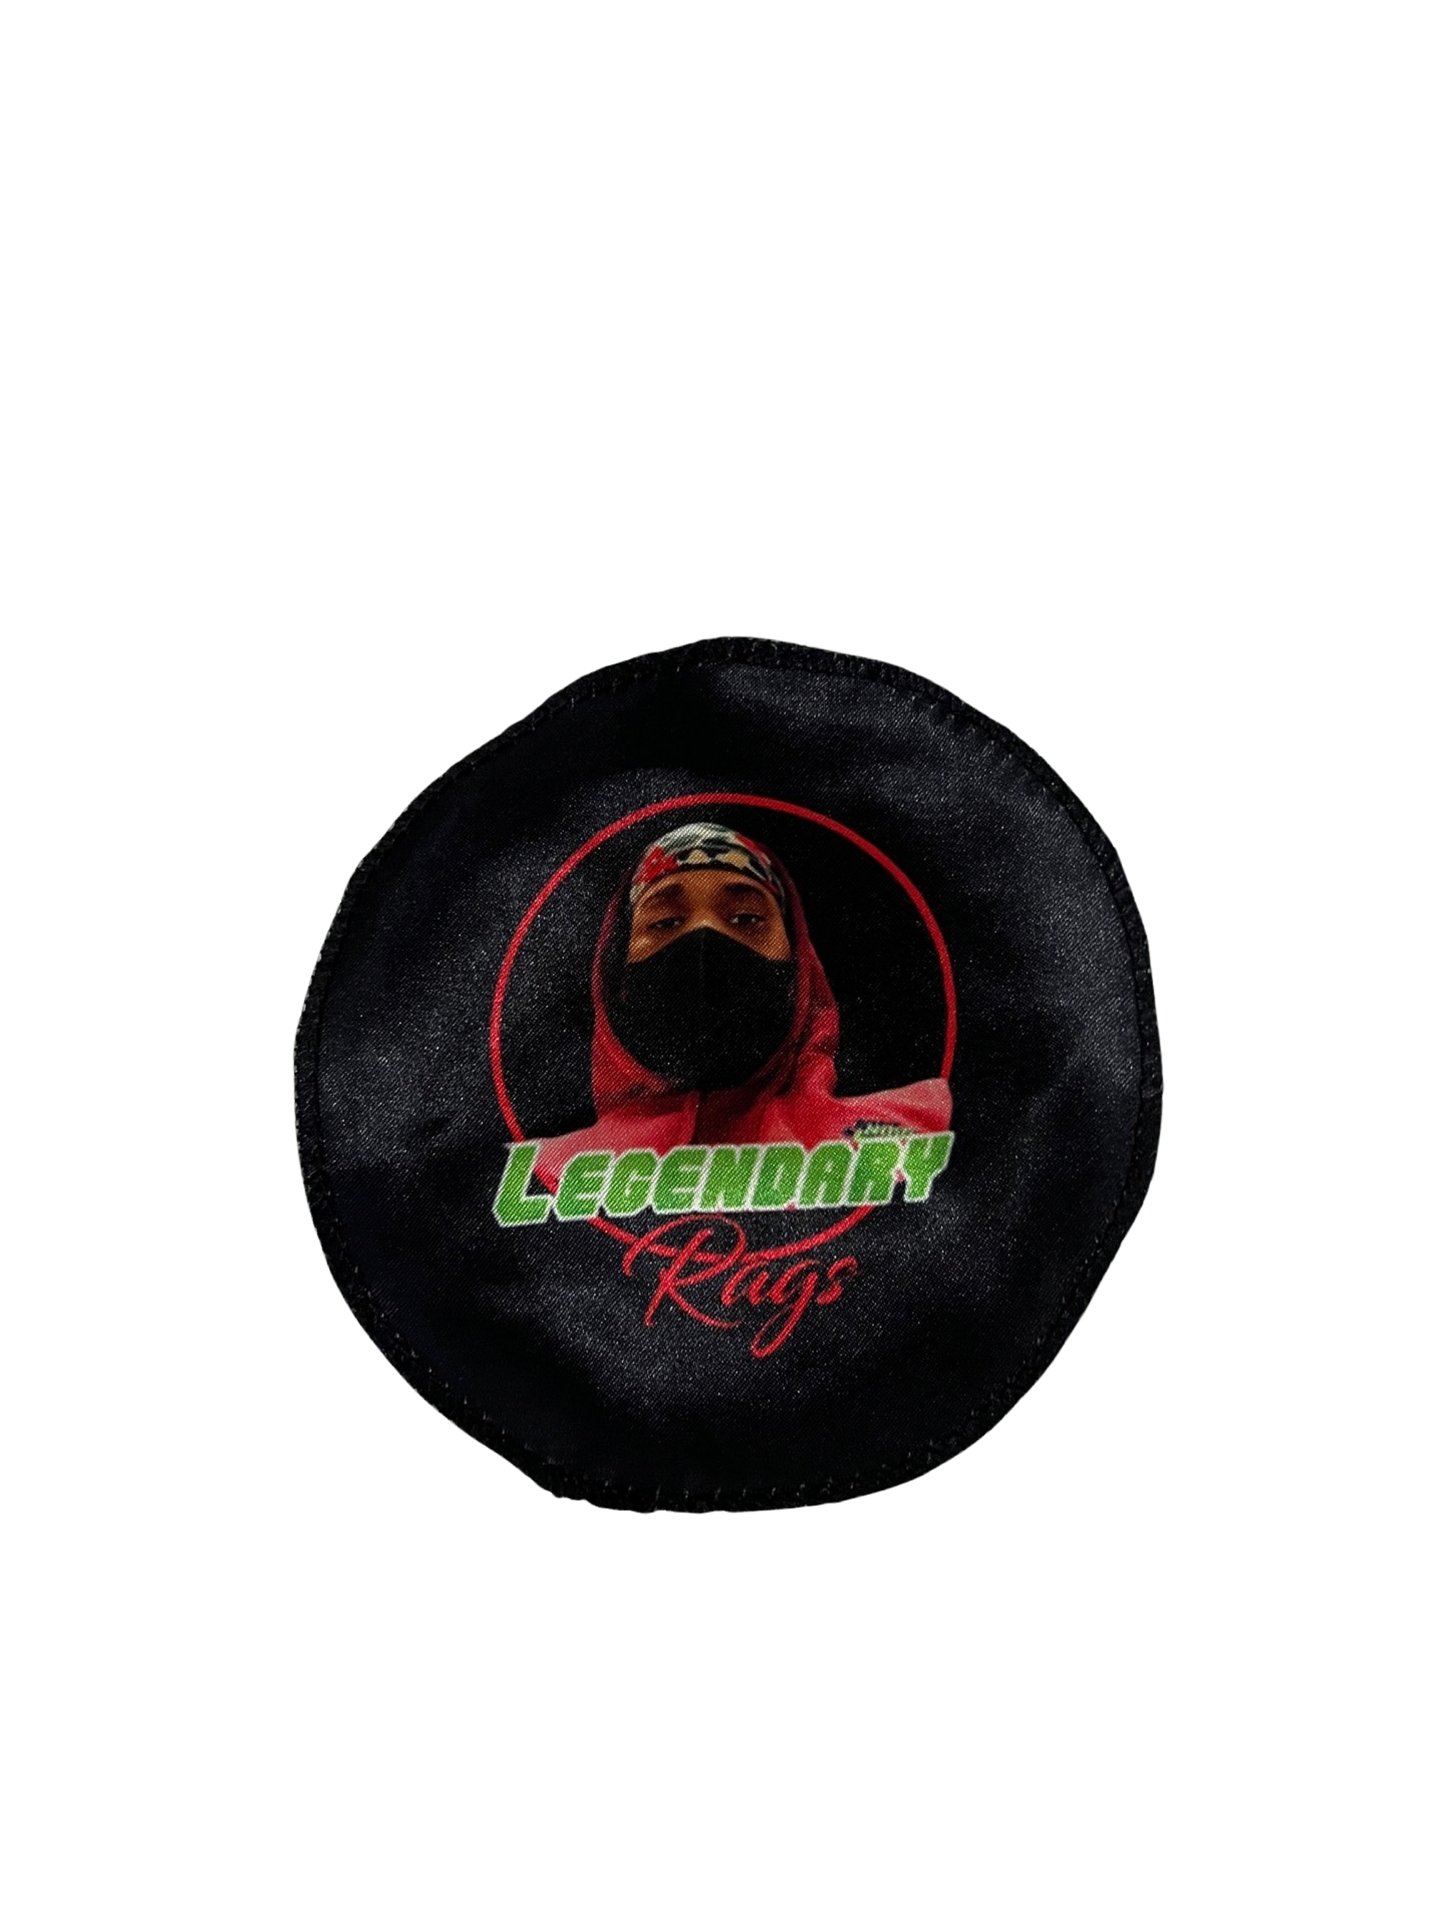 Legendary Black Logo Crown Patch